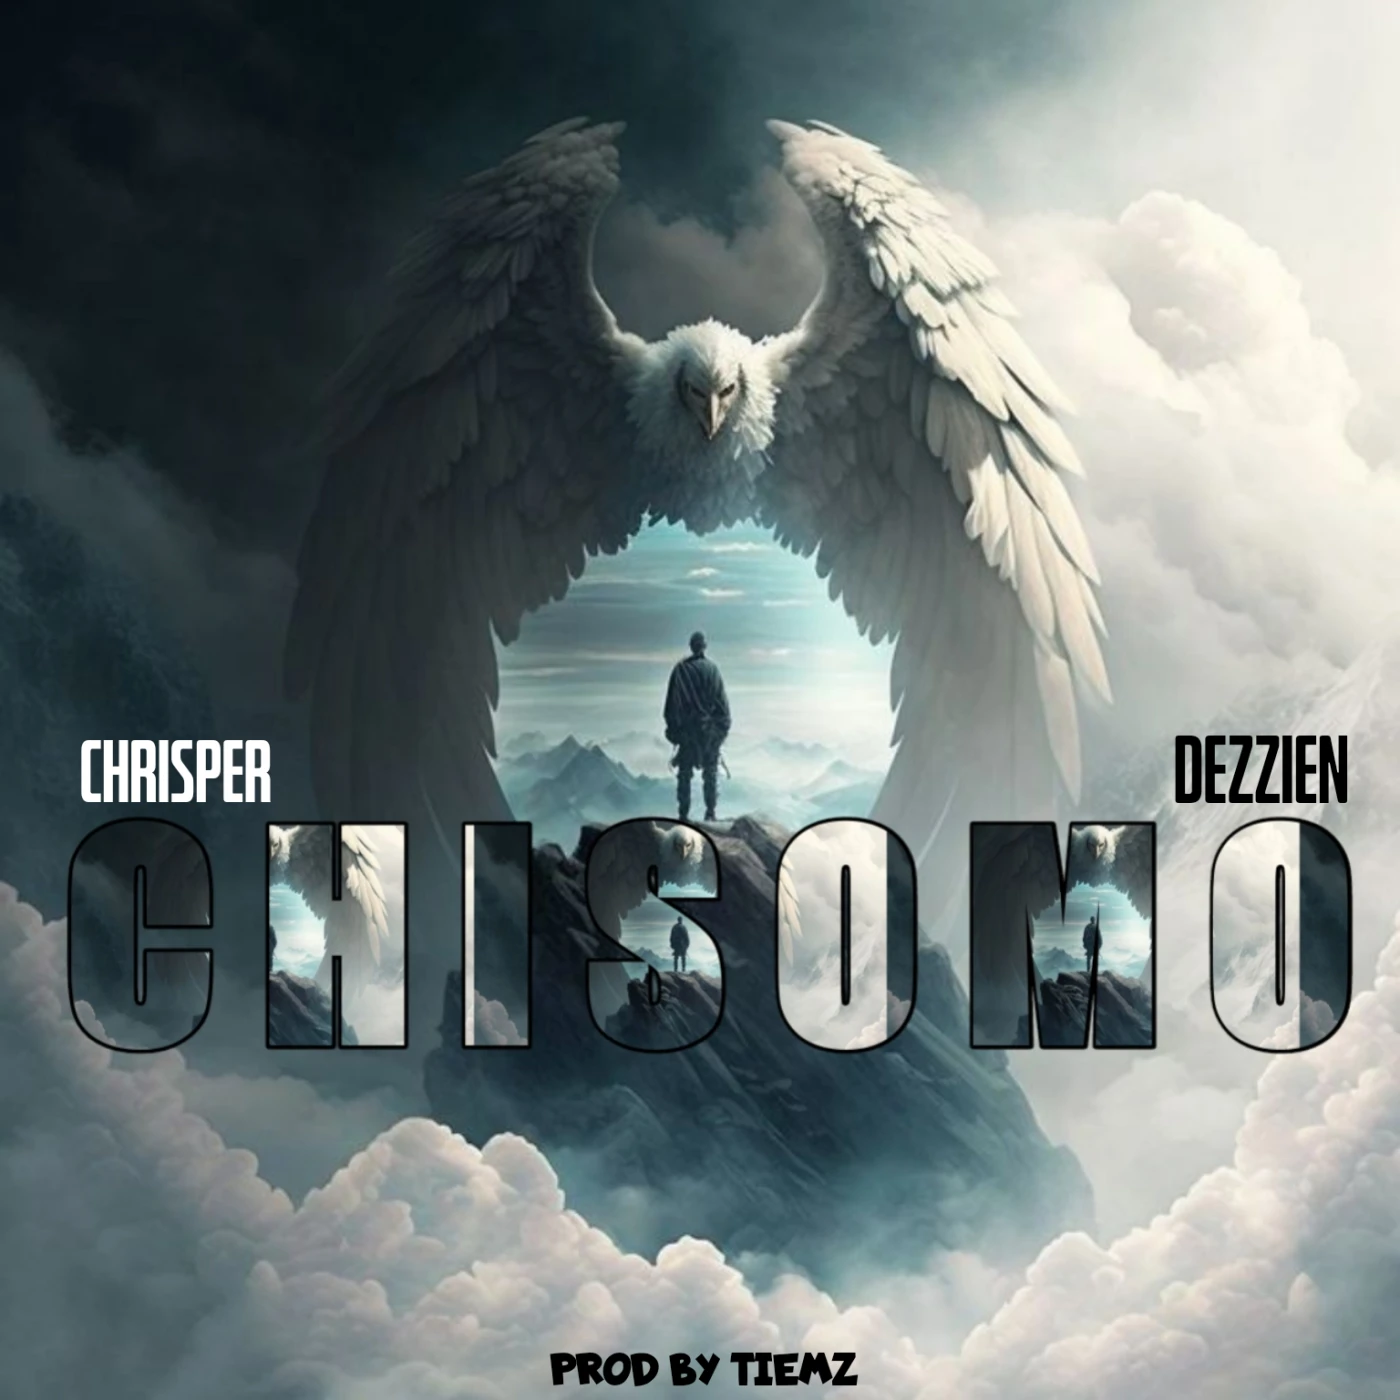 chisomo-feat-dezzien-chrispa-Just Malawi Music